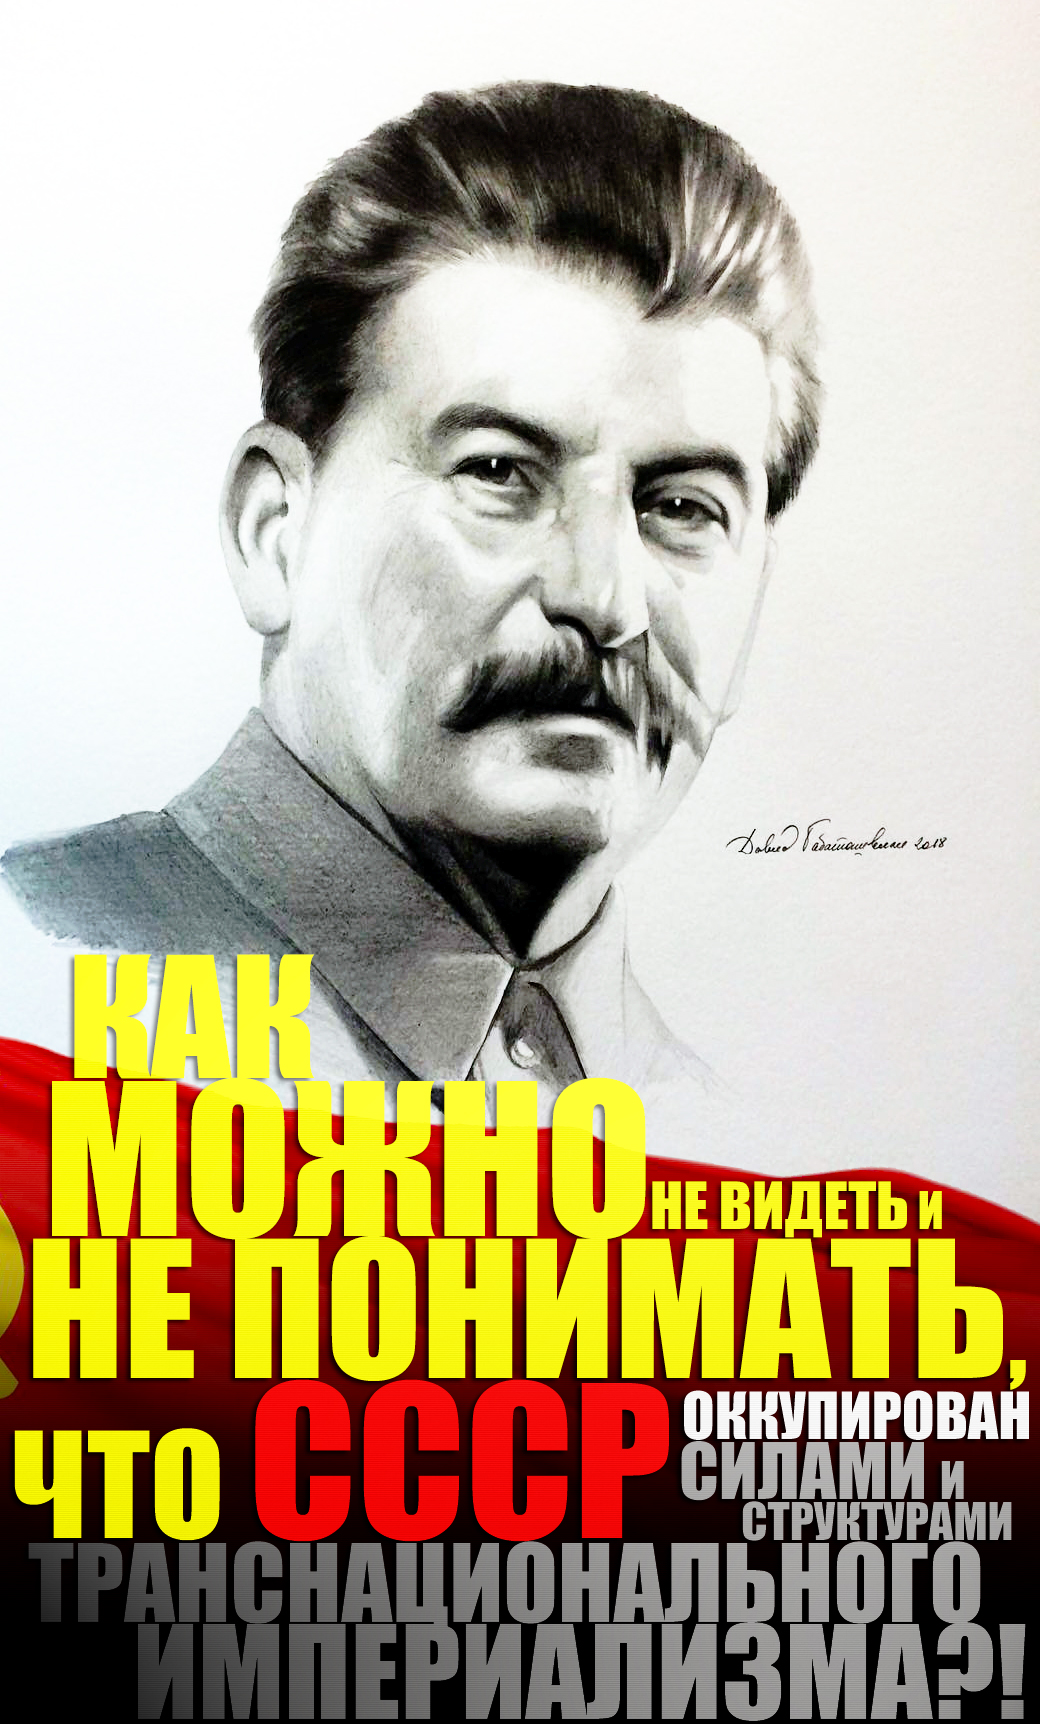 Х большевик